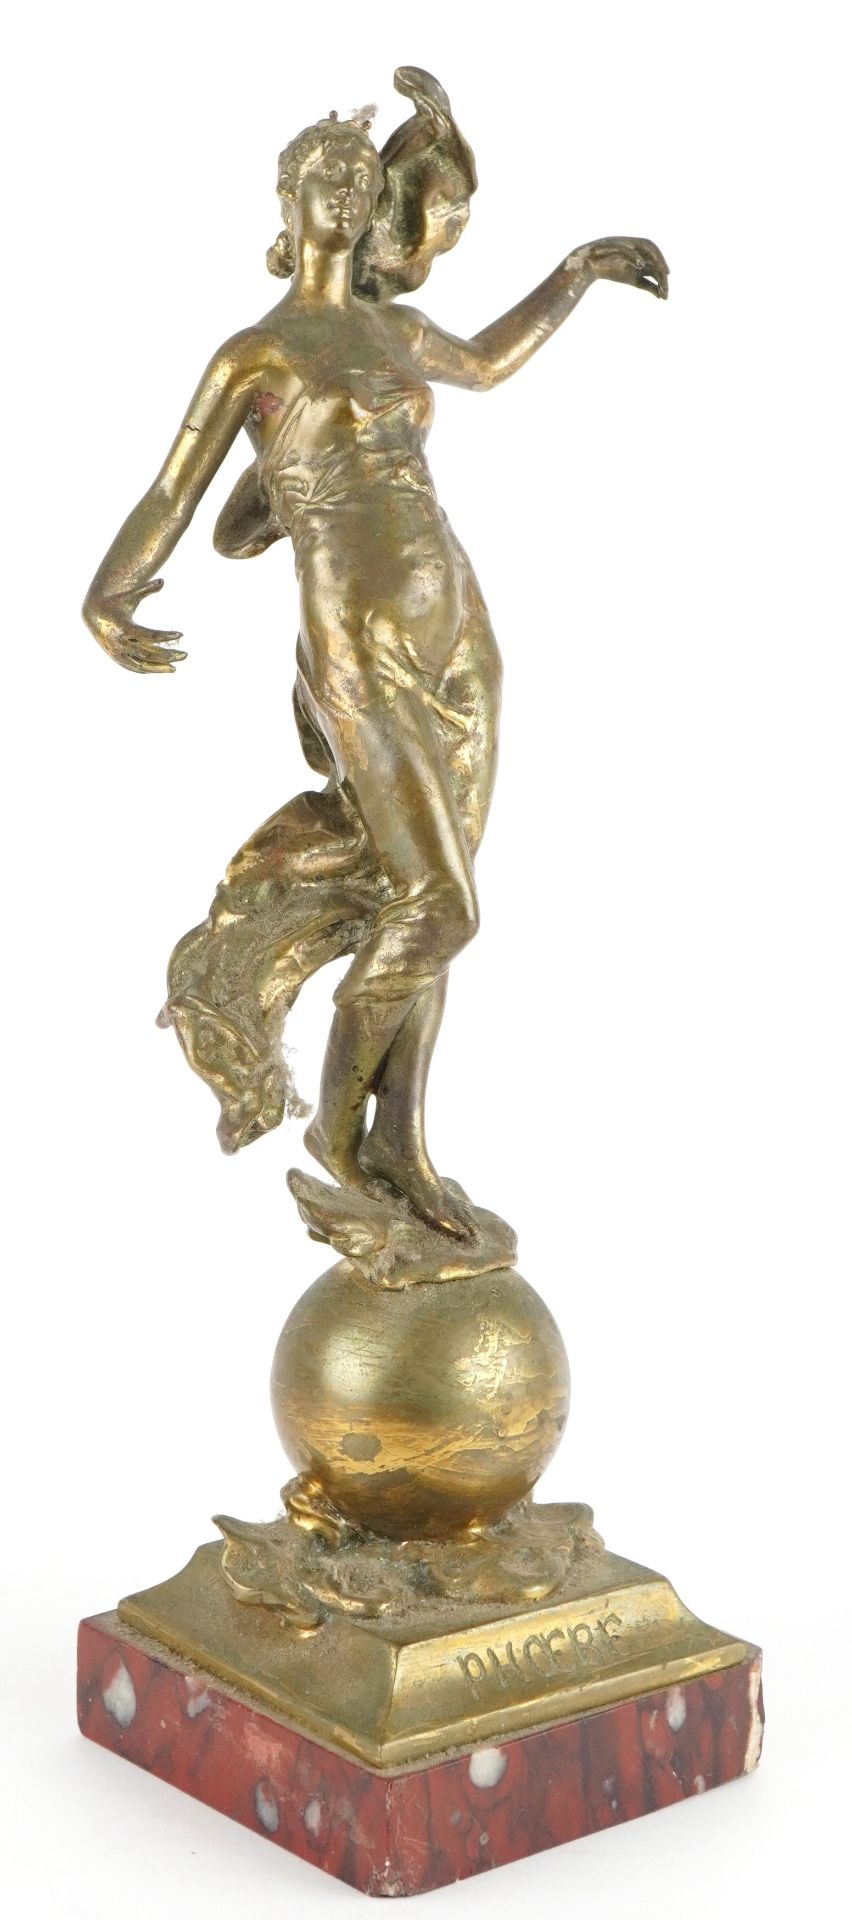 Eugene Marioton, French Art Nouveau bronzed sculpture entitled Phoebe, impressed Salon 1889,